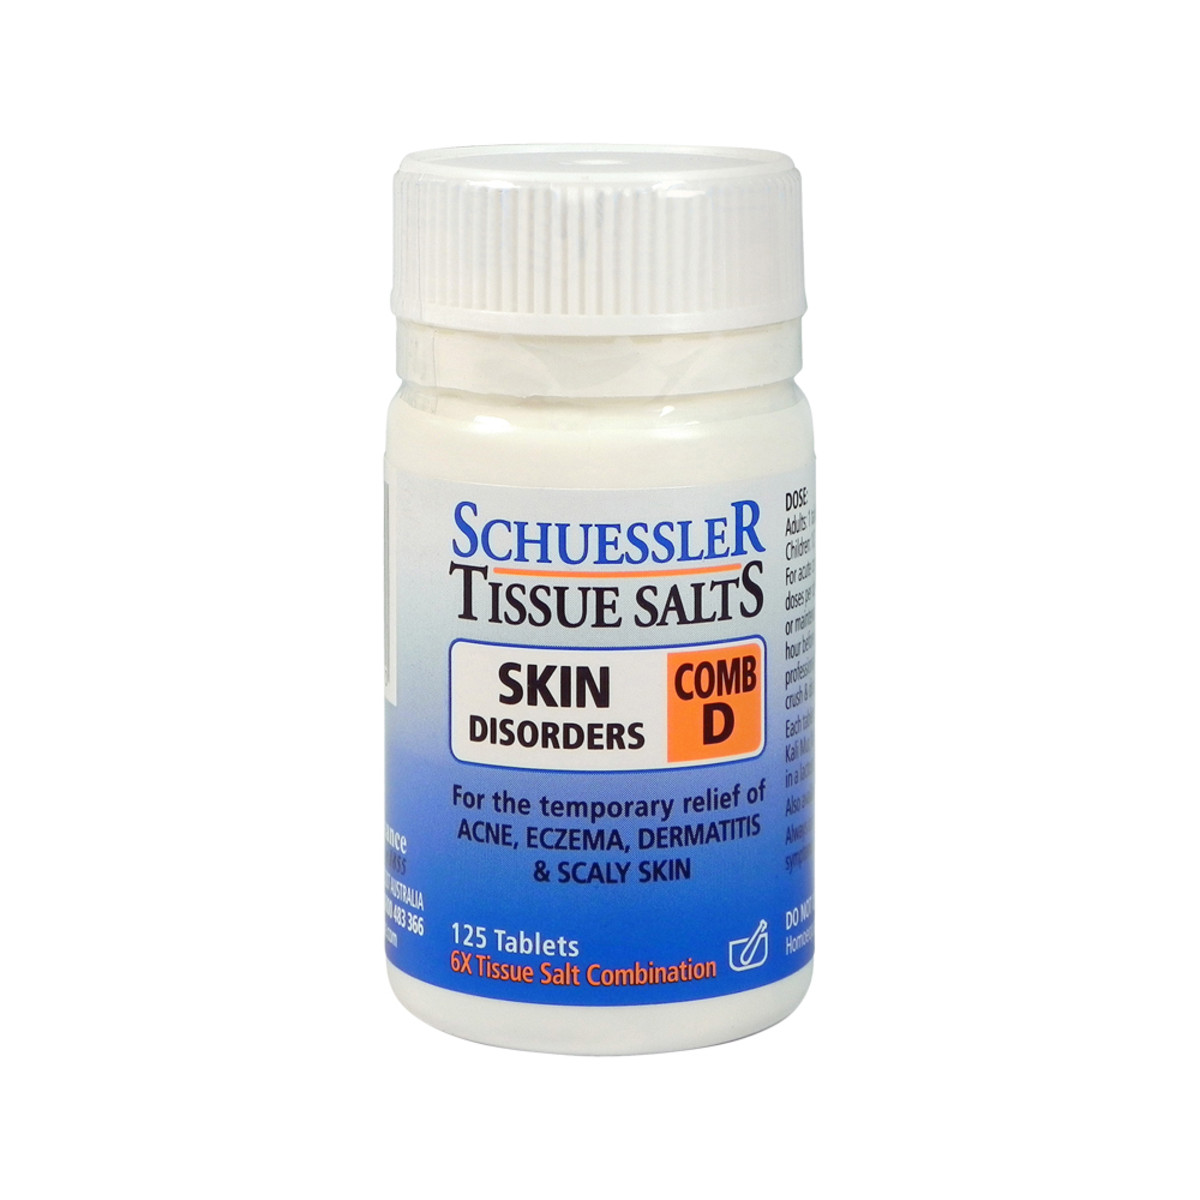 Schuessler Tissue Salts Comb D (Skin Disorders) 125t